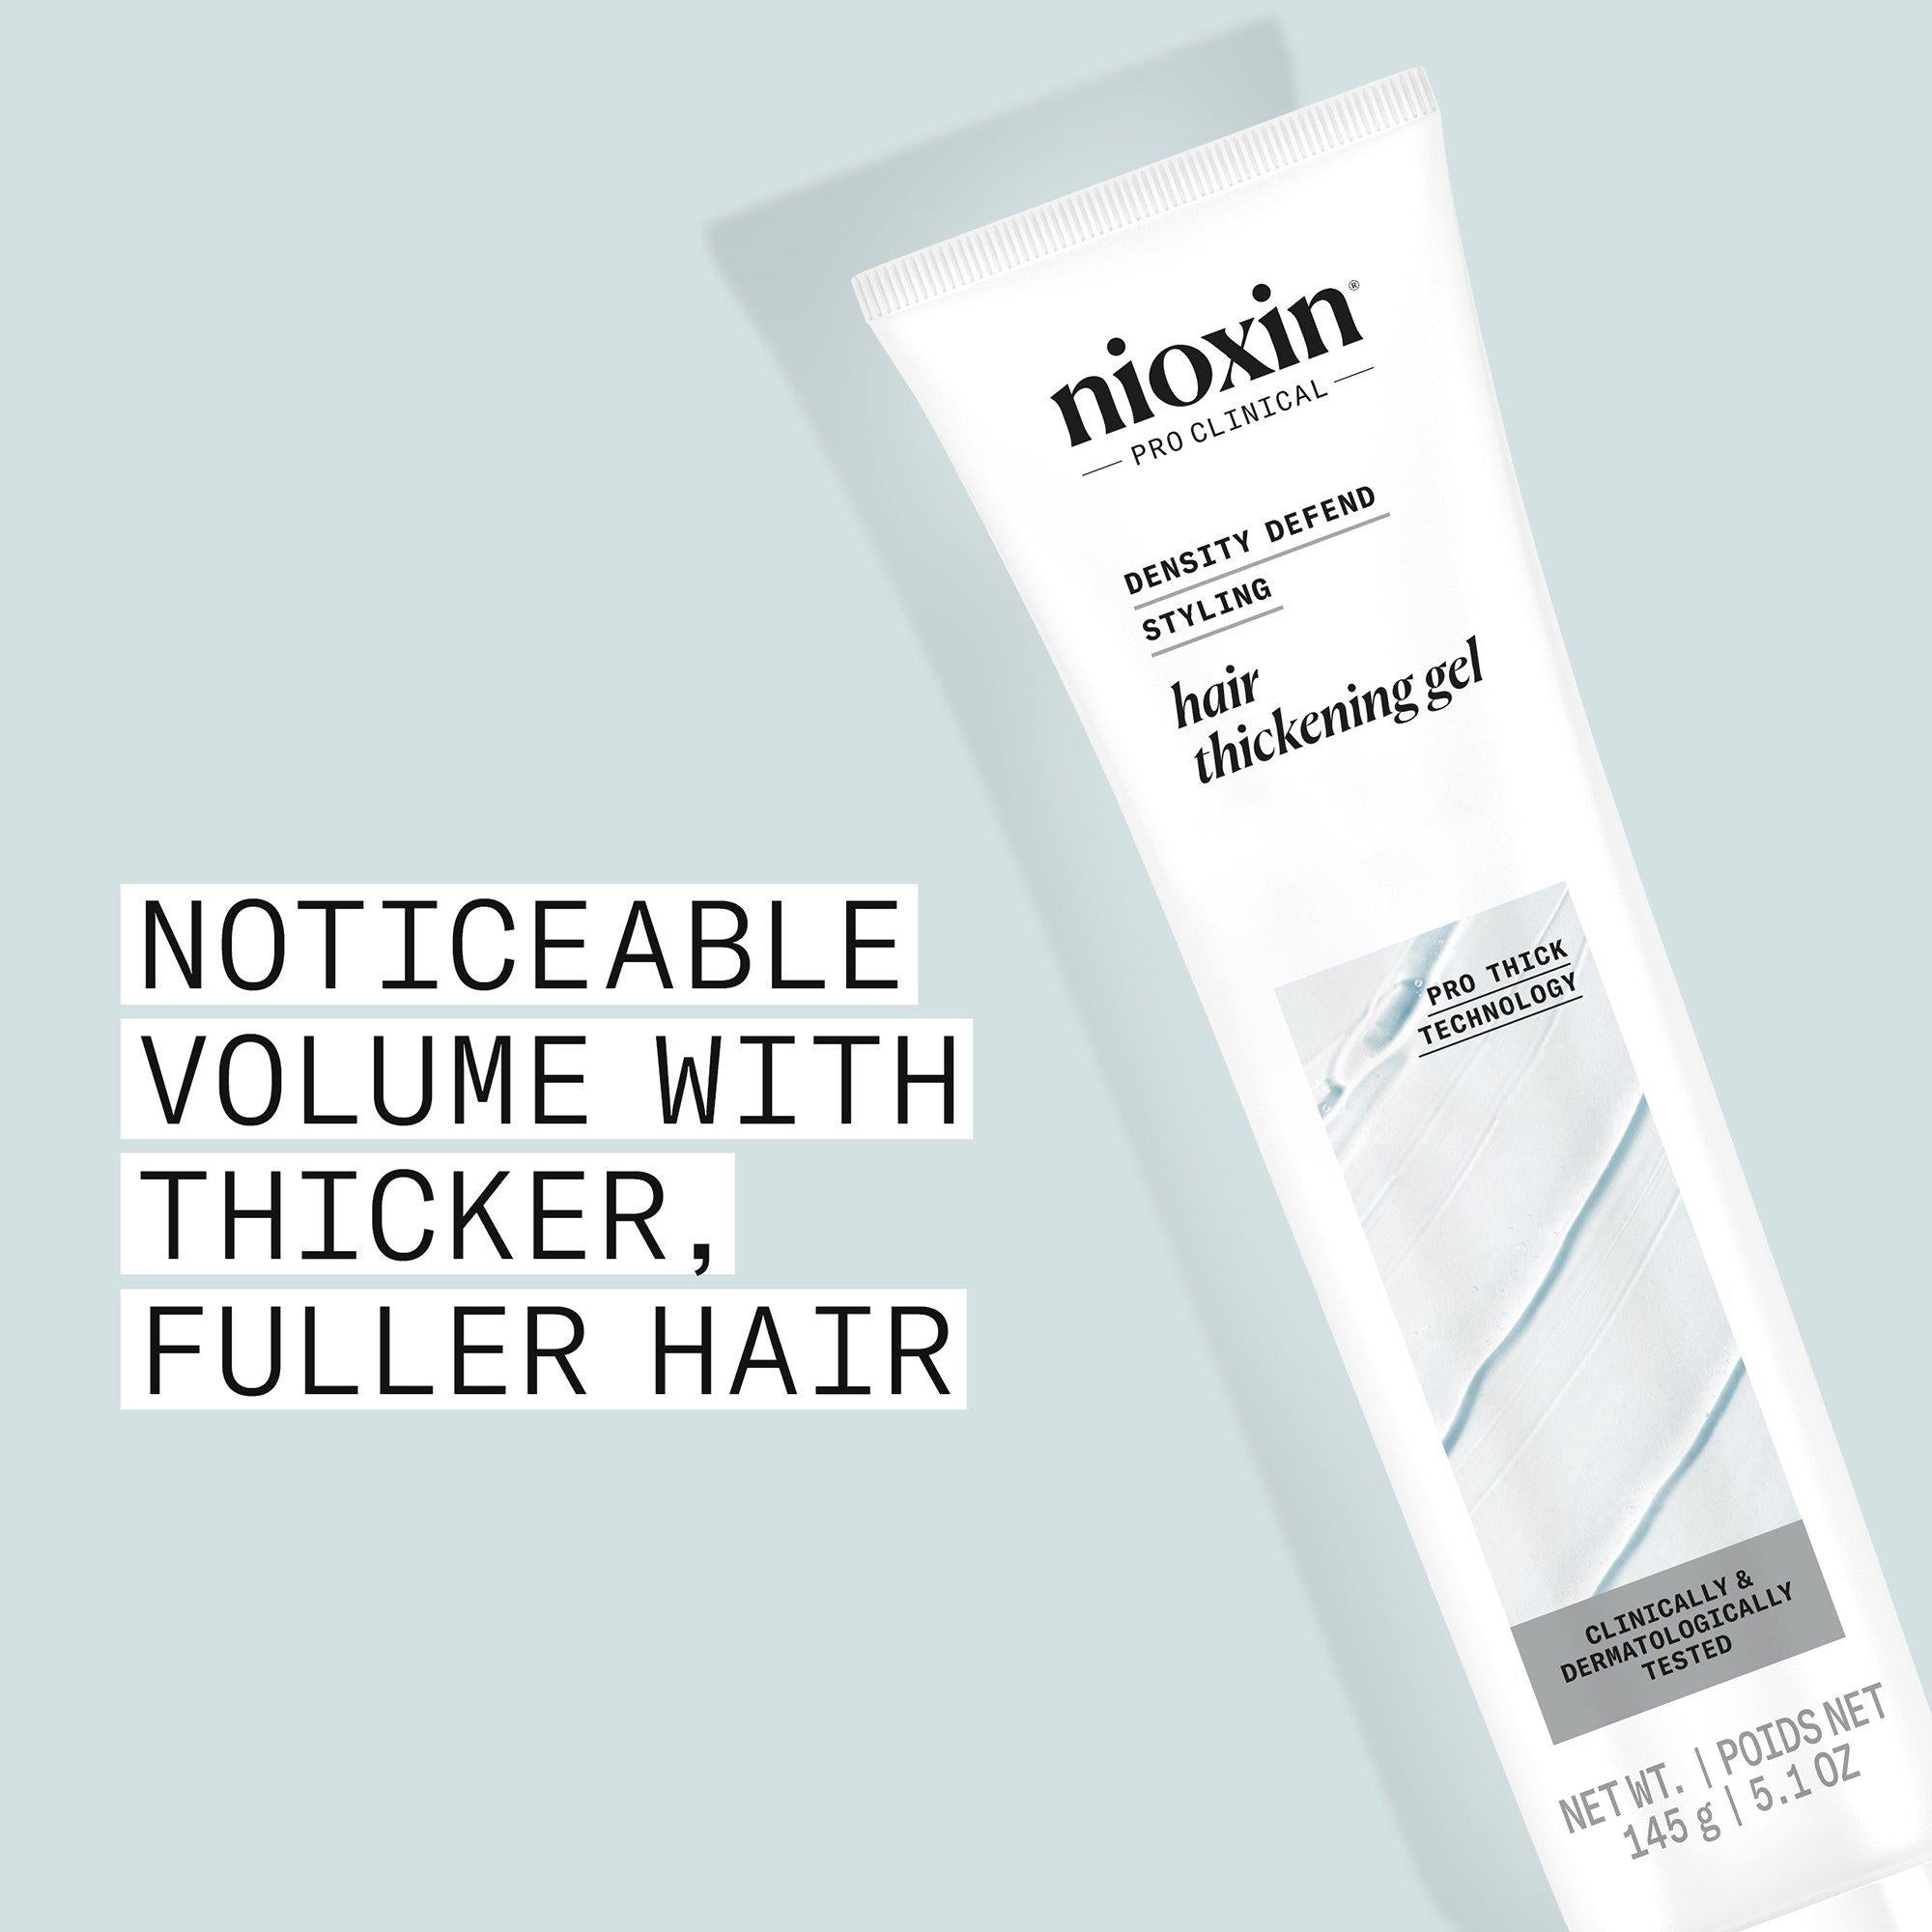 Nioxin Density Defend Styling Hair Thickening Gel / 5.1OZ